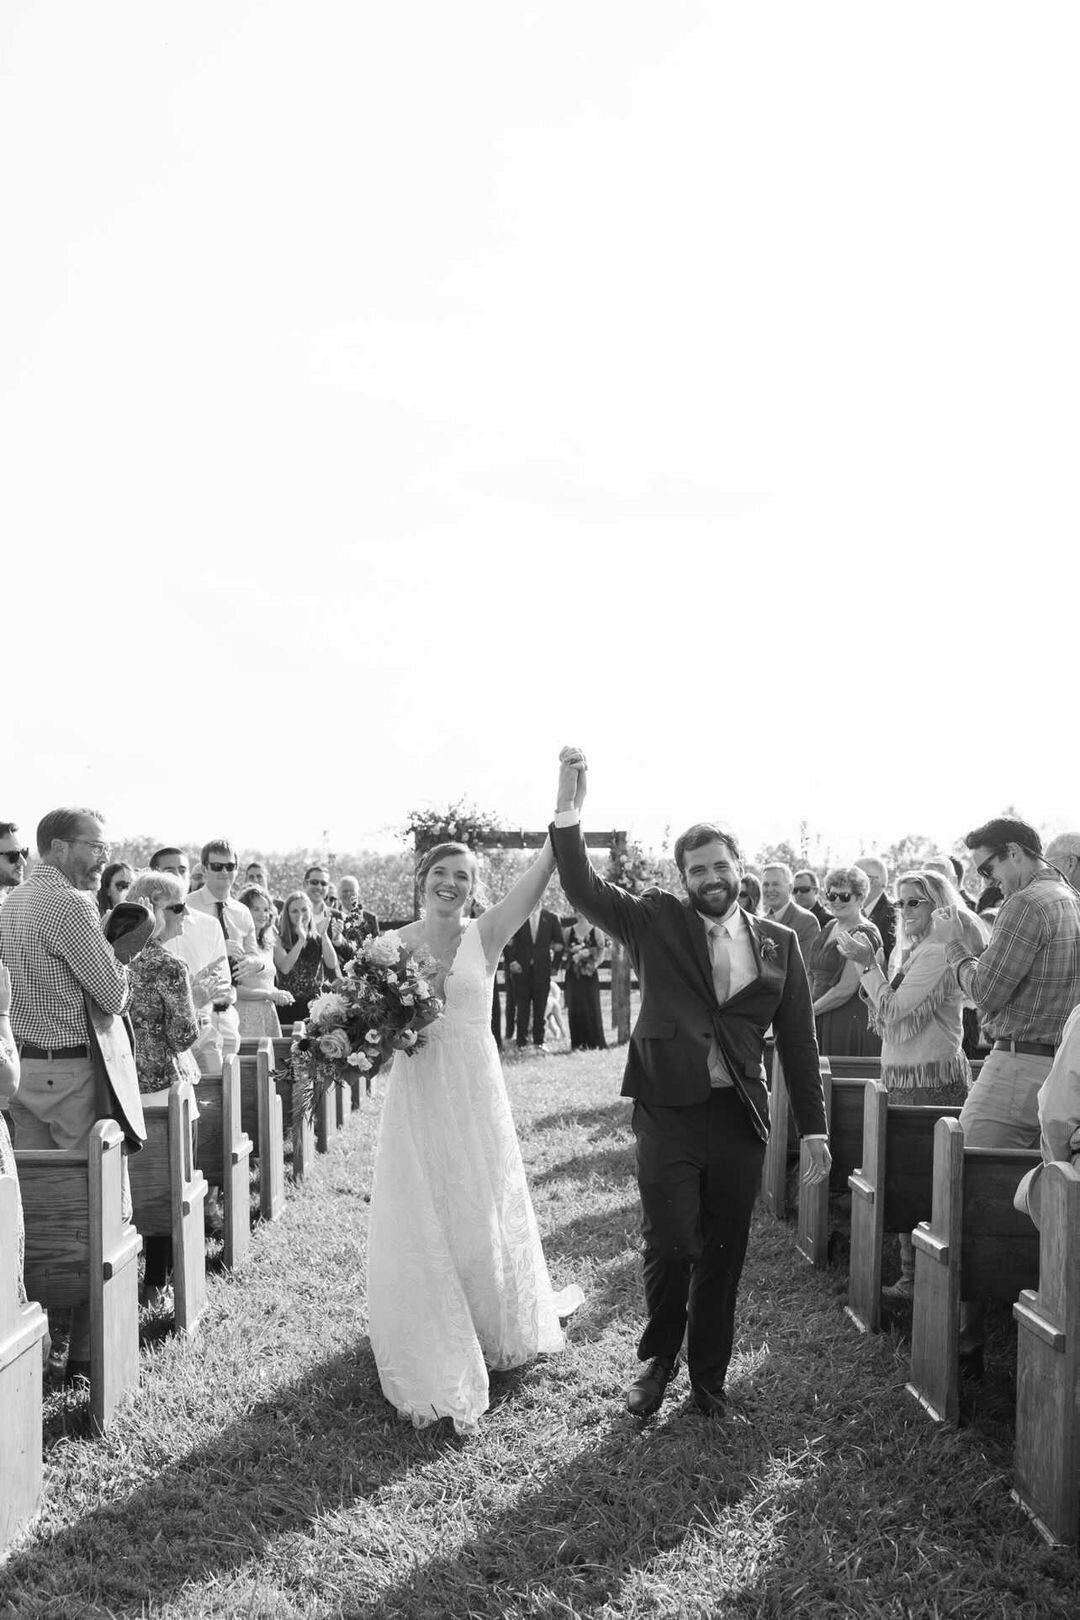 Bride and groom celebrating at wedding